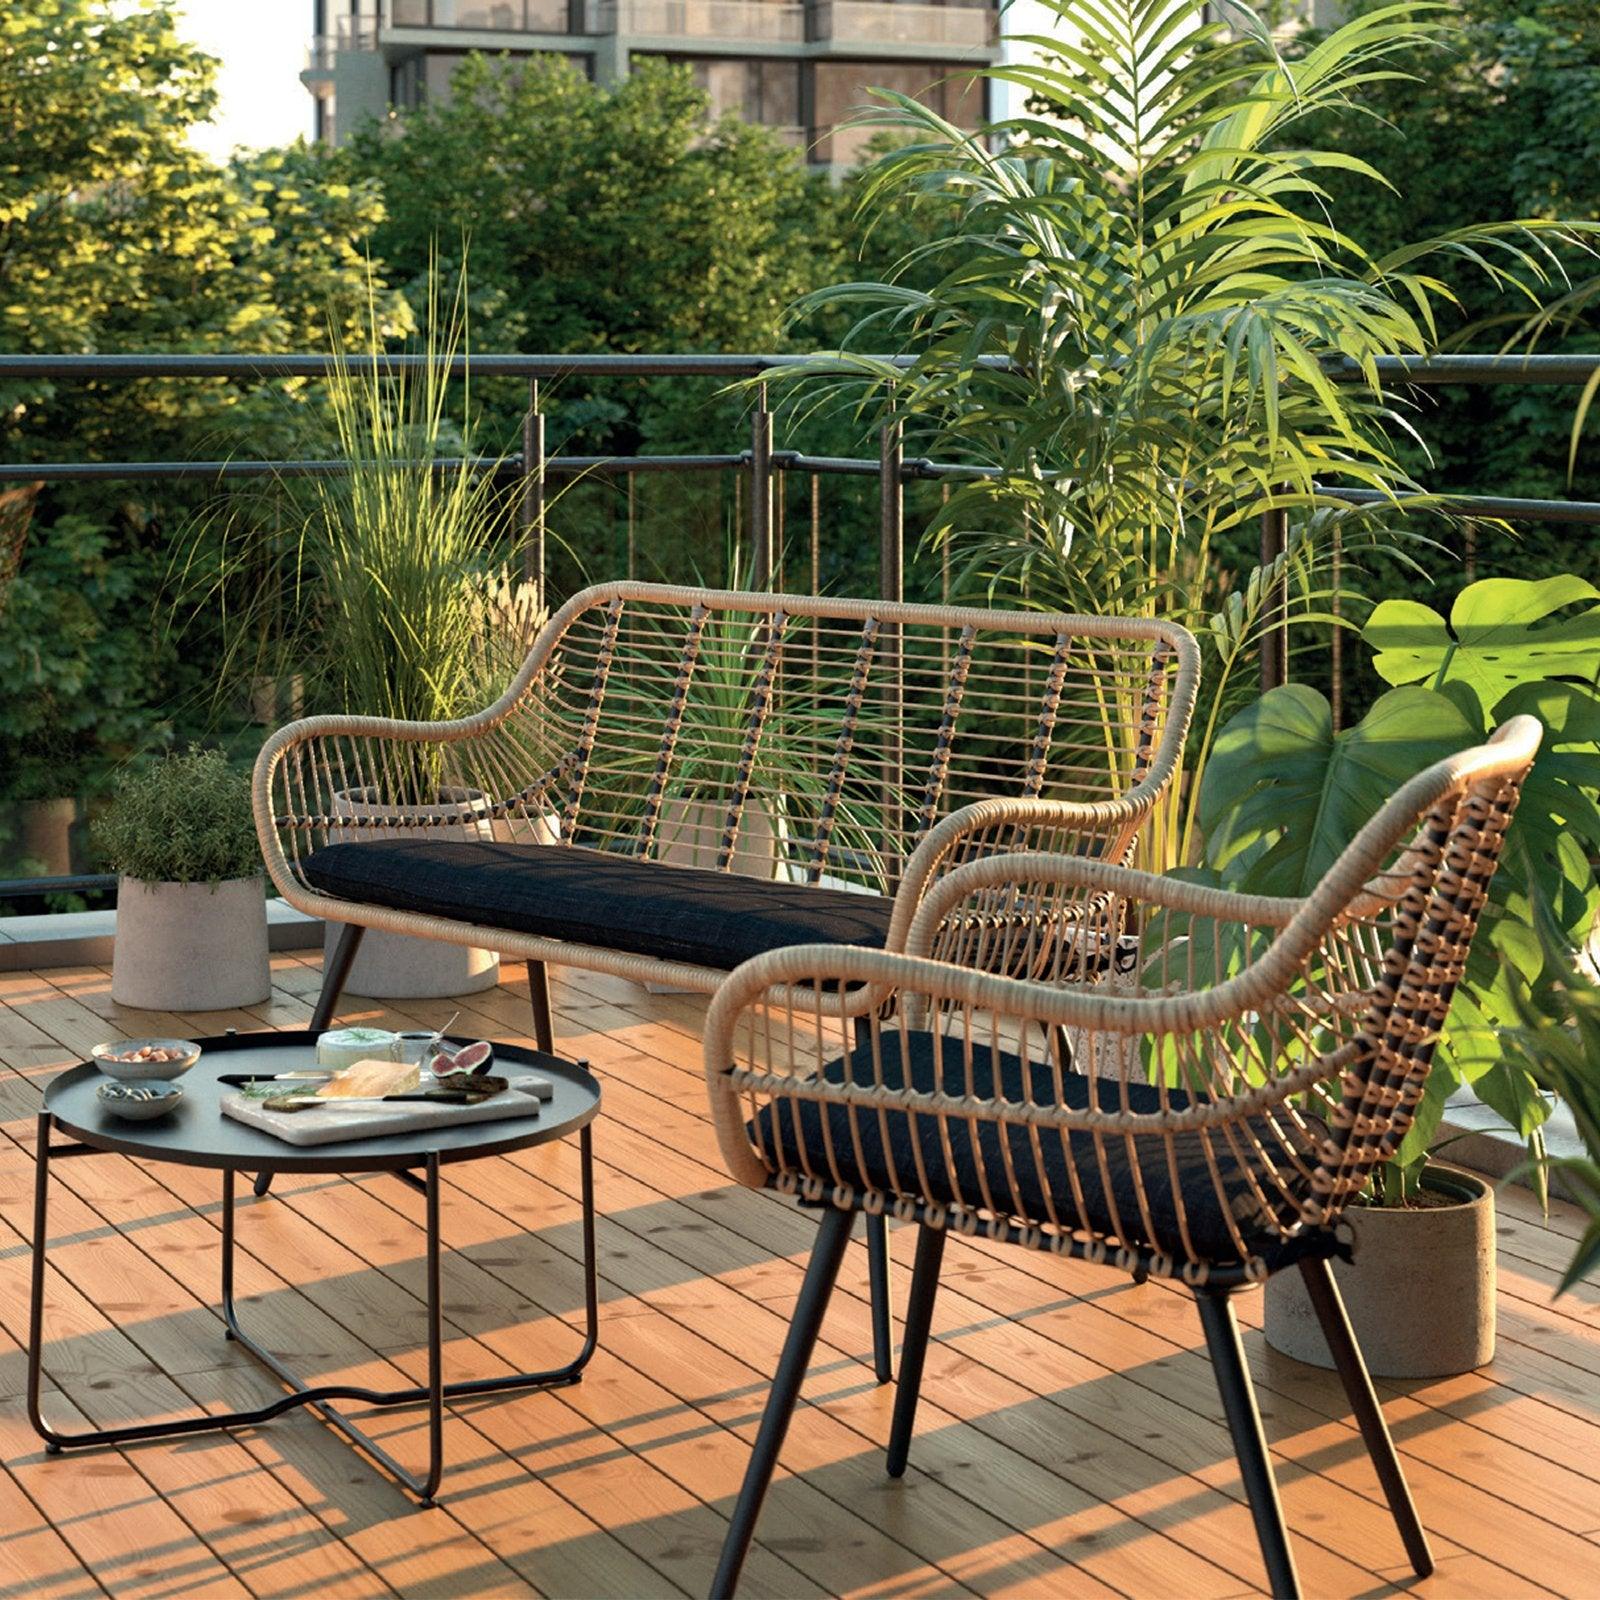 Oia Collection Furniture, Metal Frame with Natural Rattan Wicker Design - Jardina European & Modern Outdoor Patio Furniture